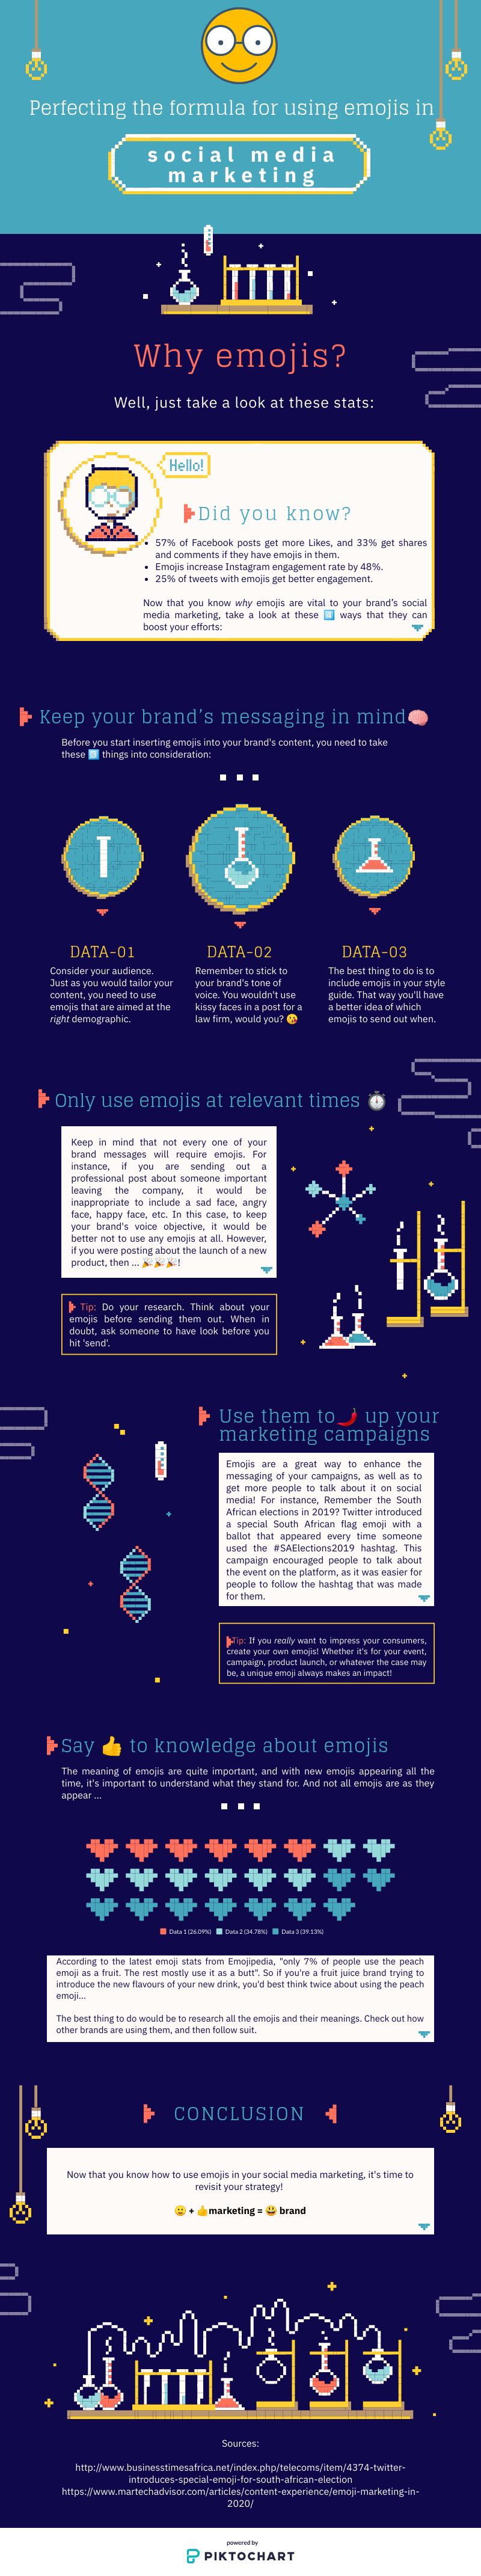 using emojis in social media marketing infographic